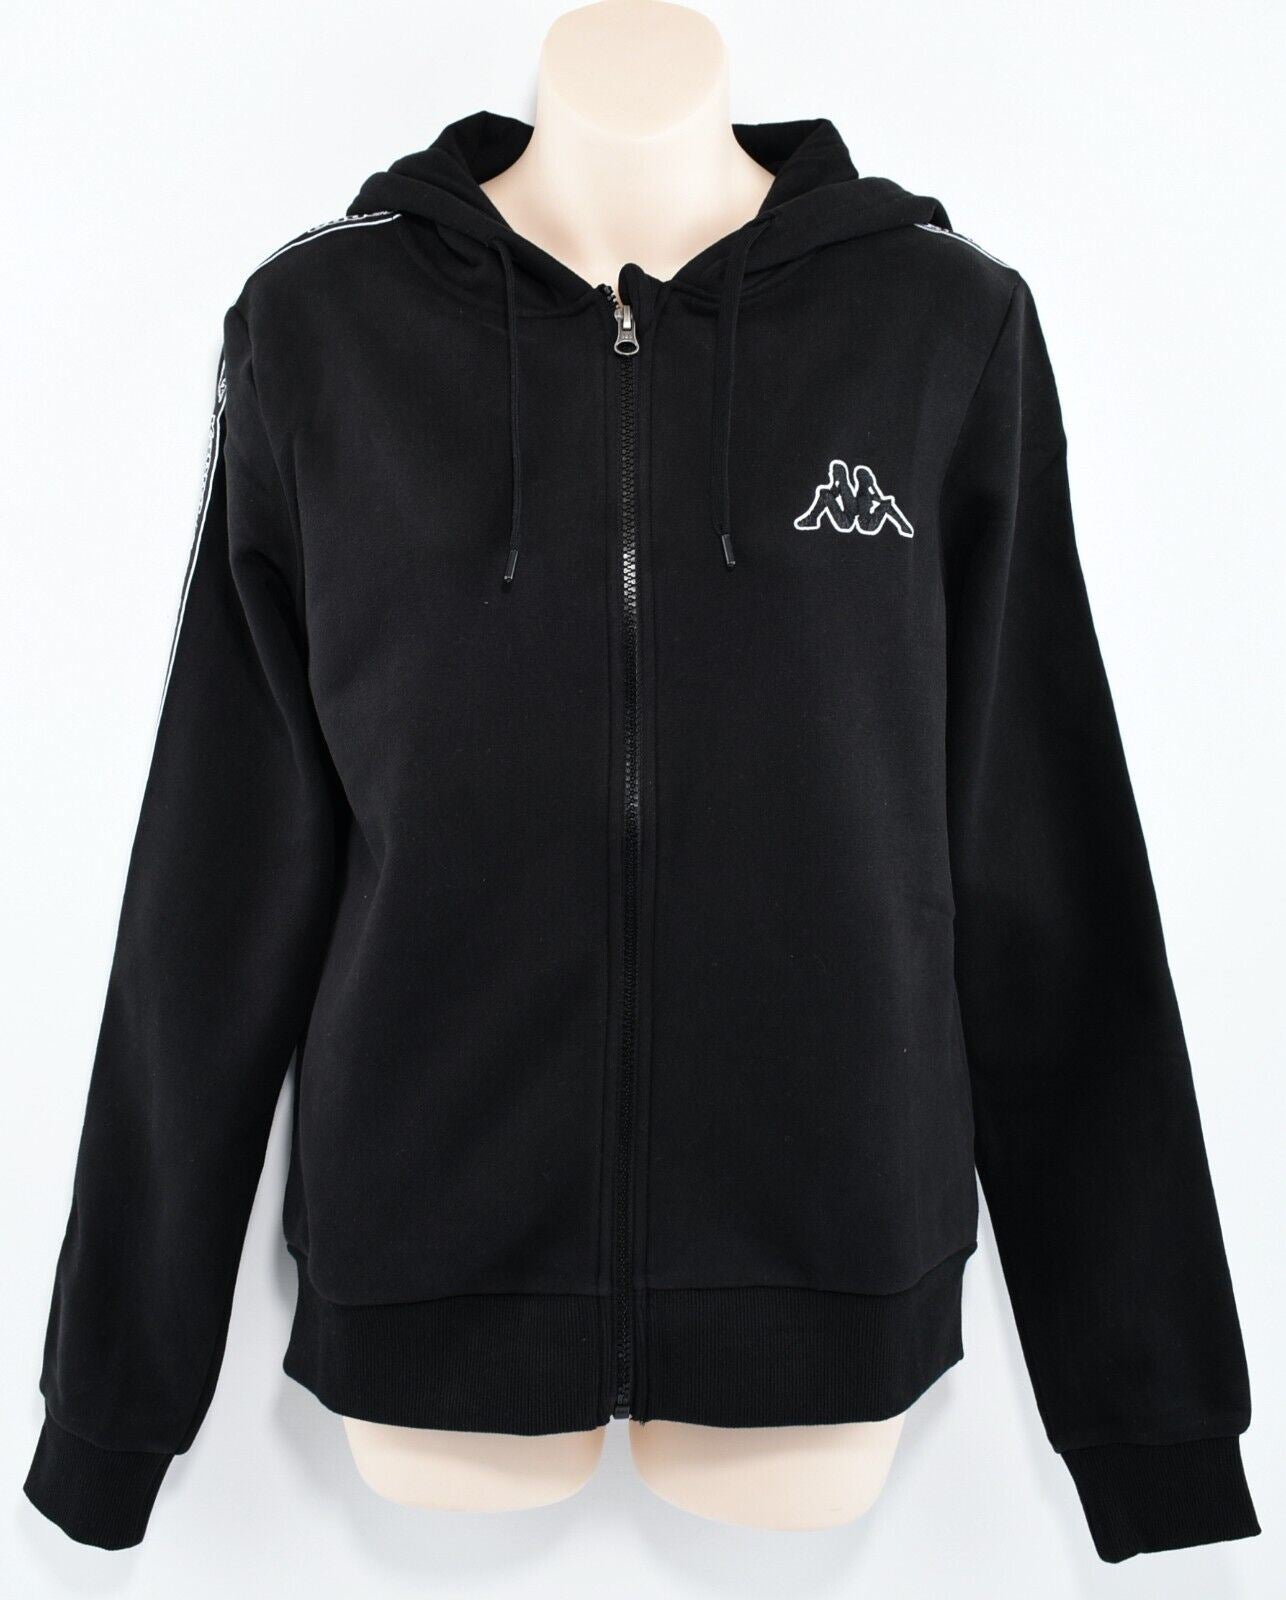 KAPPA Women's Full Zip Hoodie Jacket Sweatshirt, Black, size XS (UK 8)